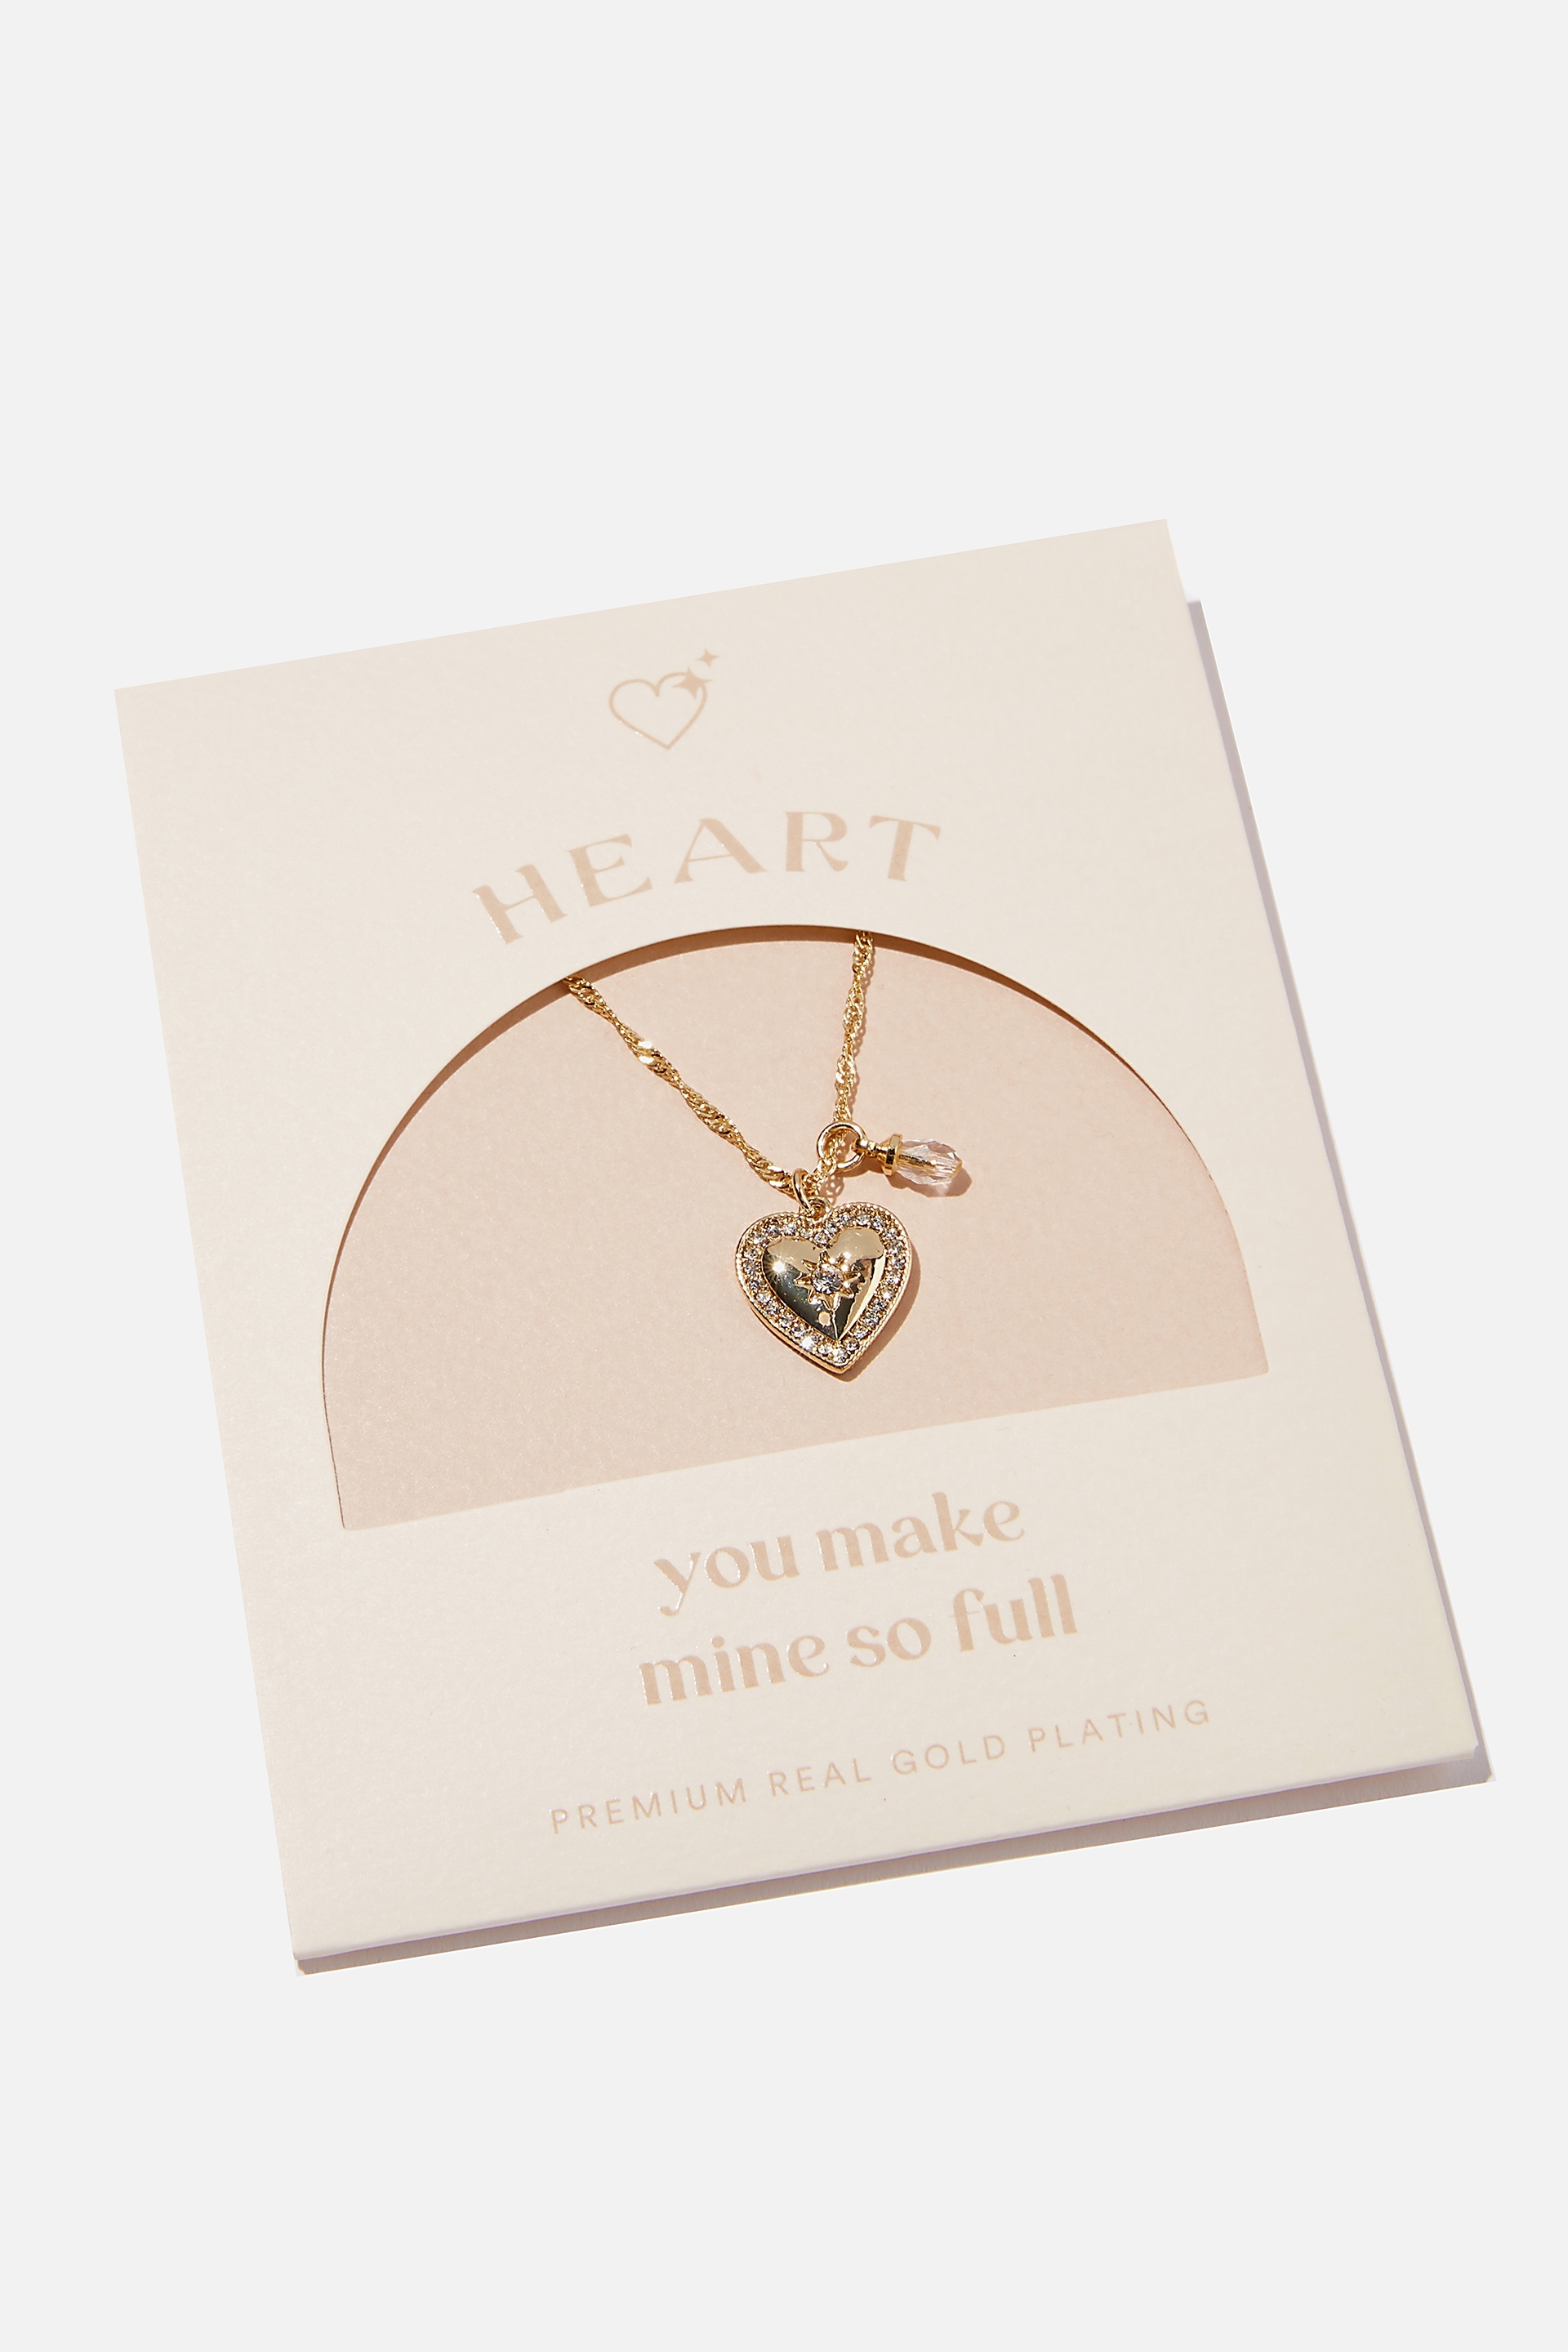 Rubi - Premium Treasures Necklace - Gold plated love heart